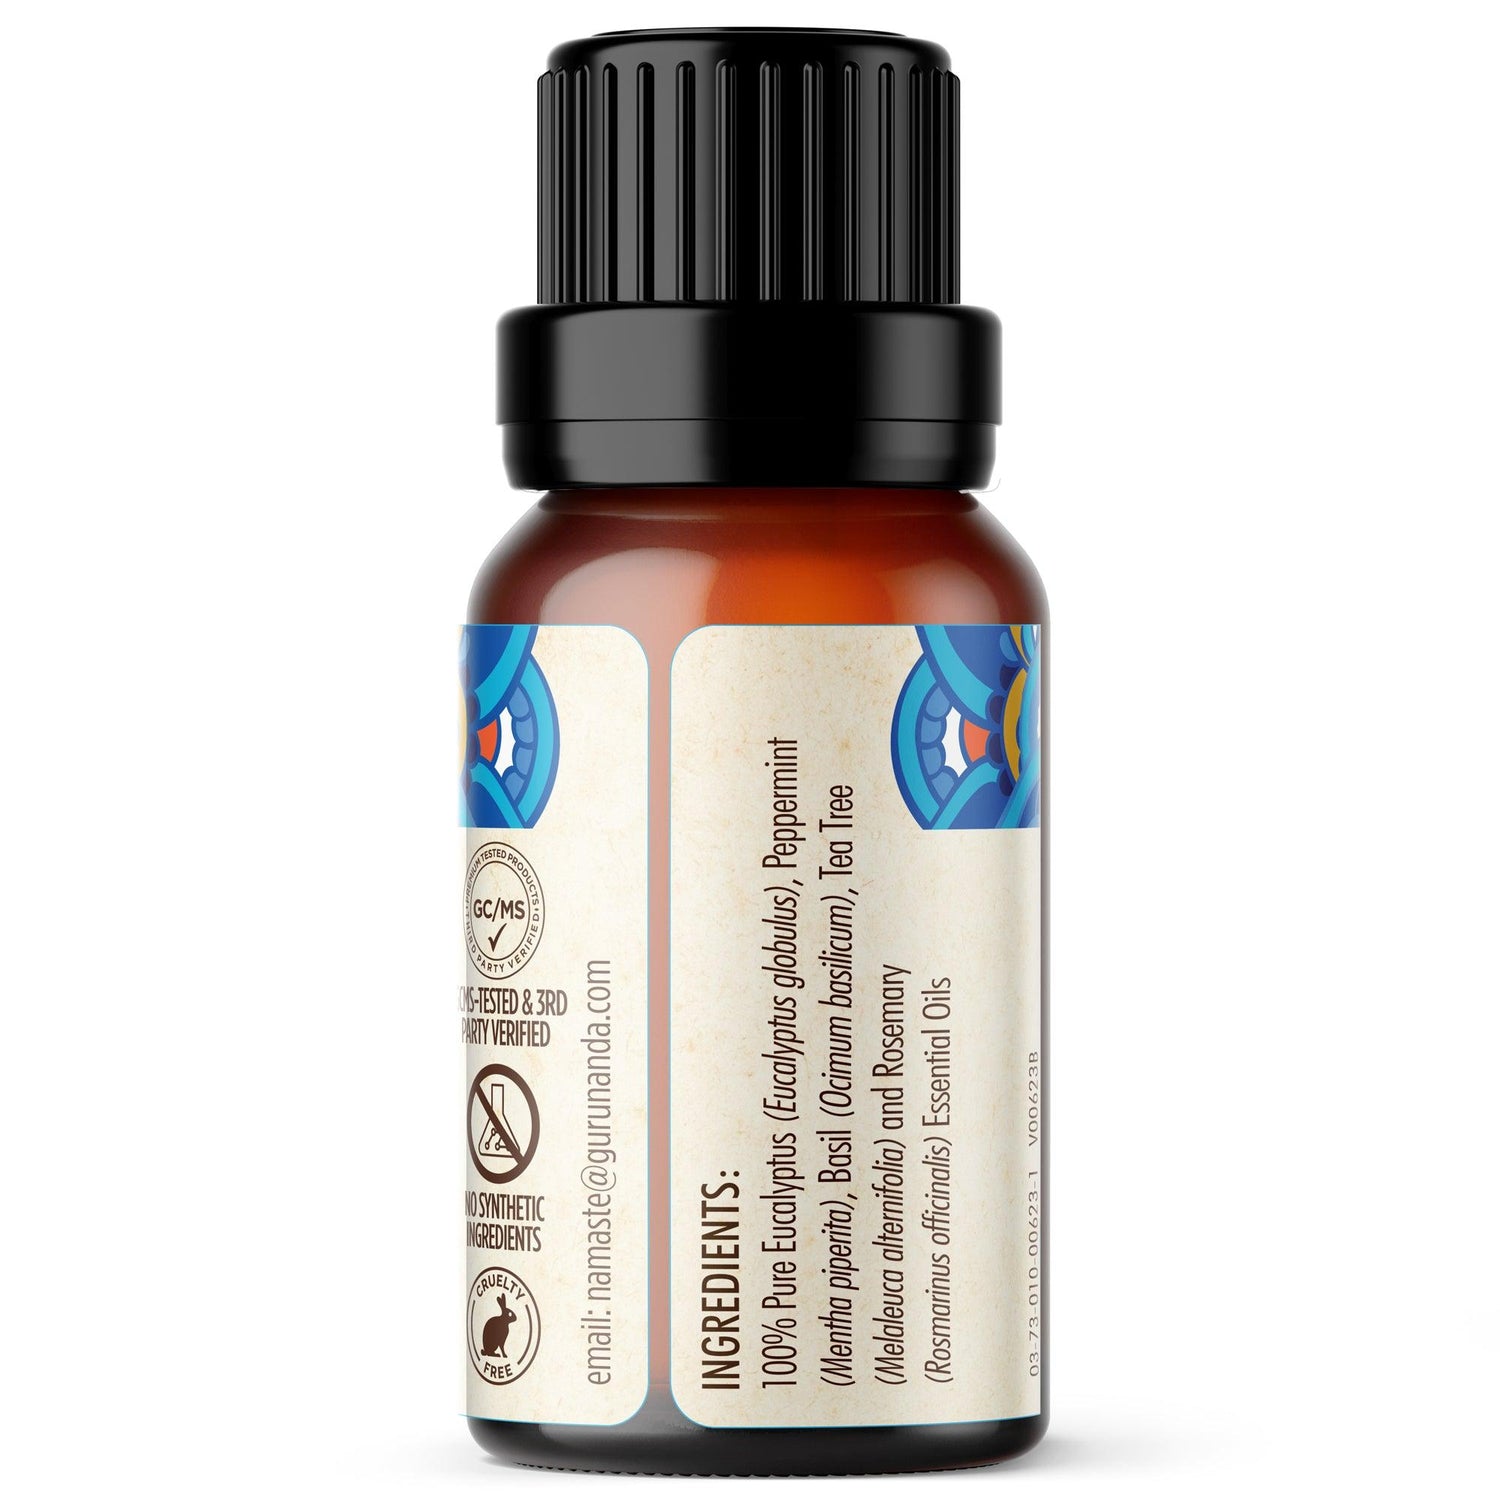 Guru Nanda Pure & Natural Essential Oil, True Lavender, 0.5 fl oz/15 mL,  Pack Of 2 Ingredients and Reviews